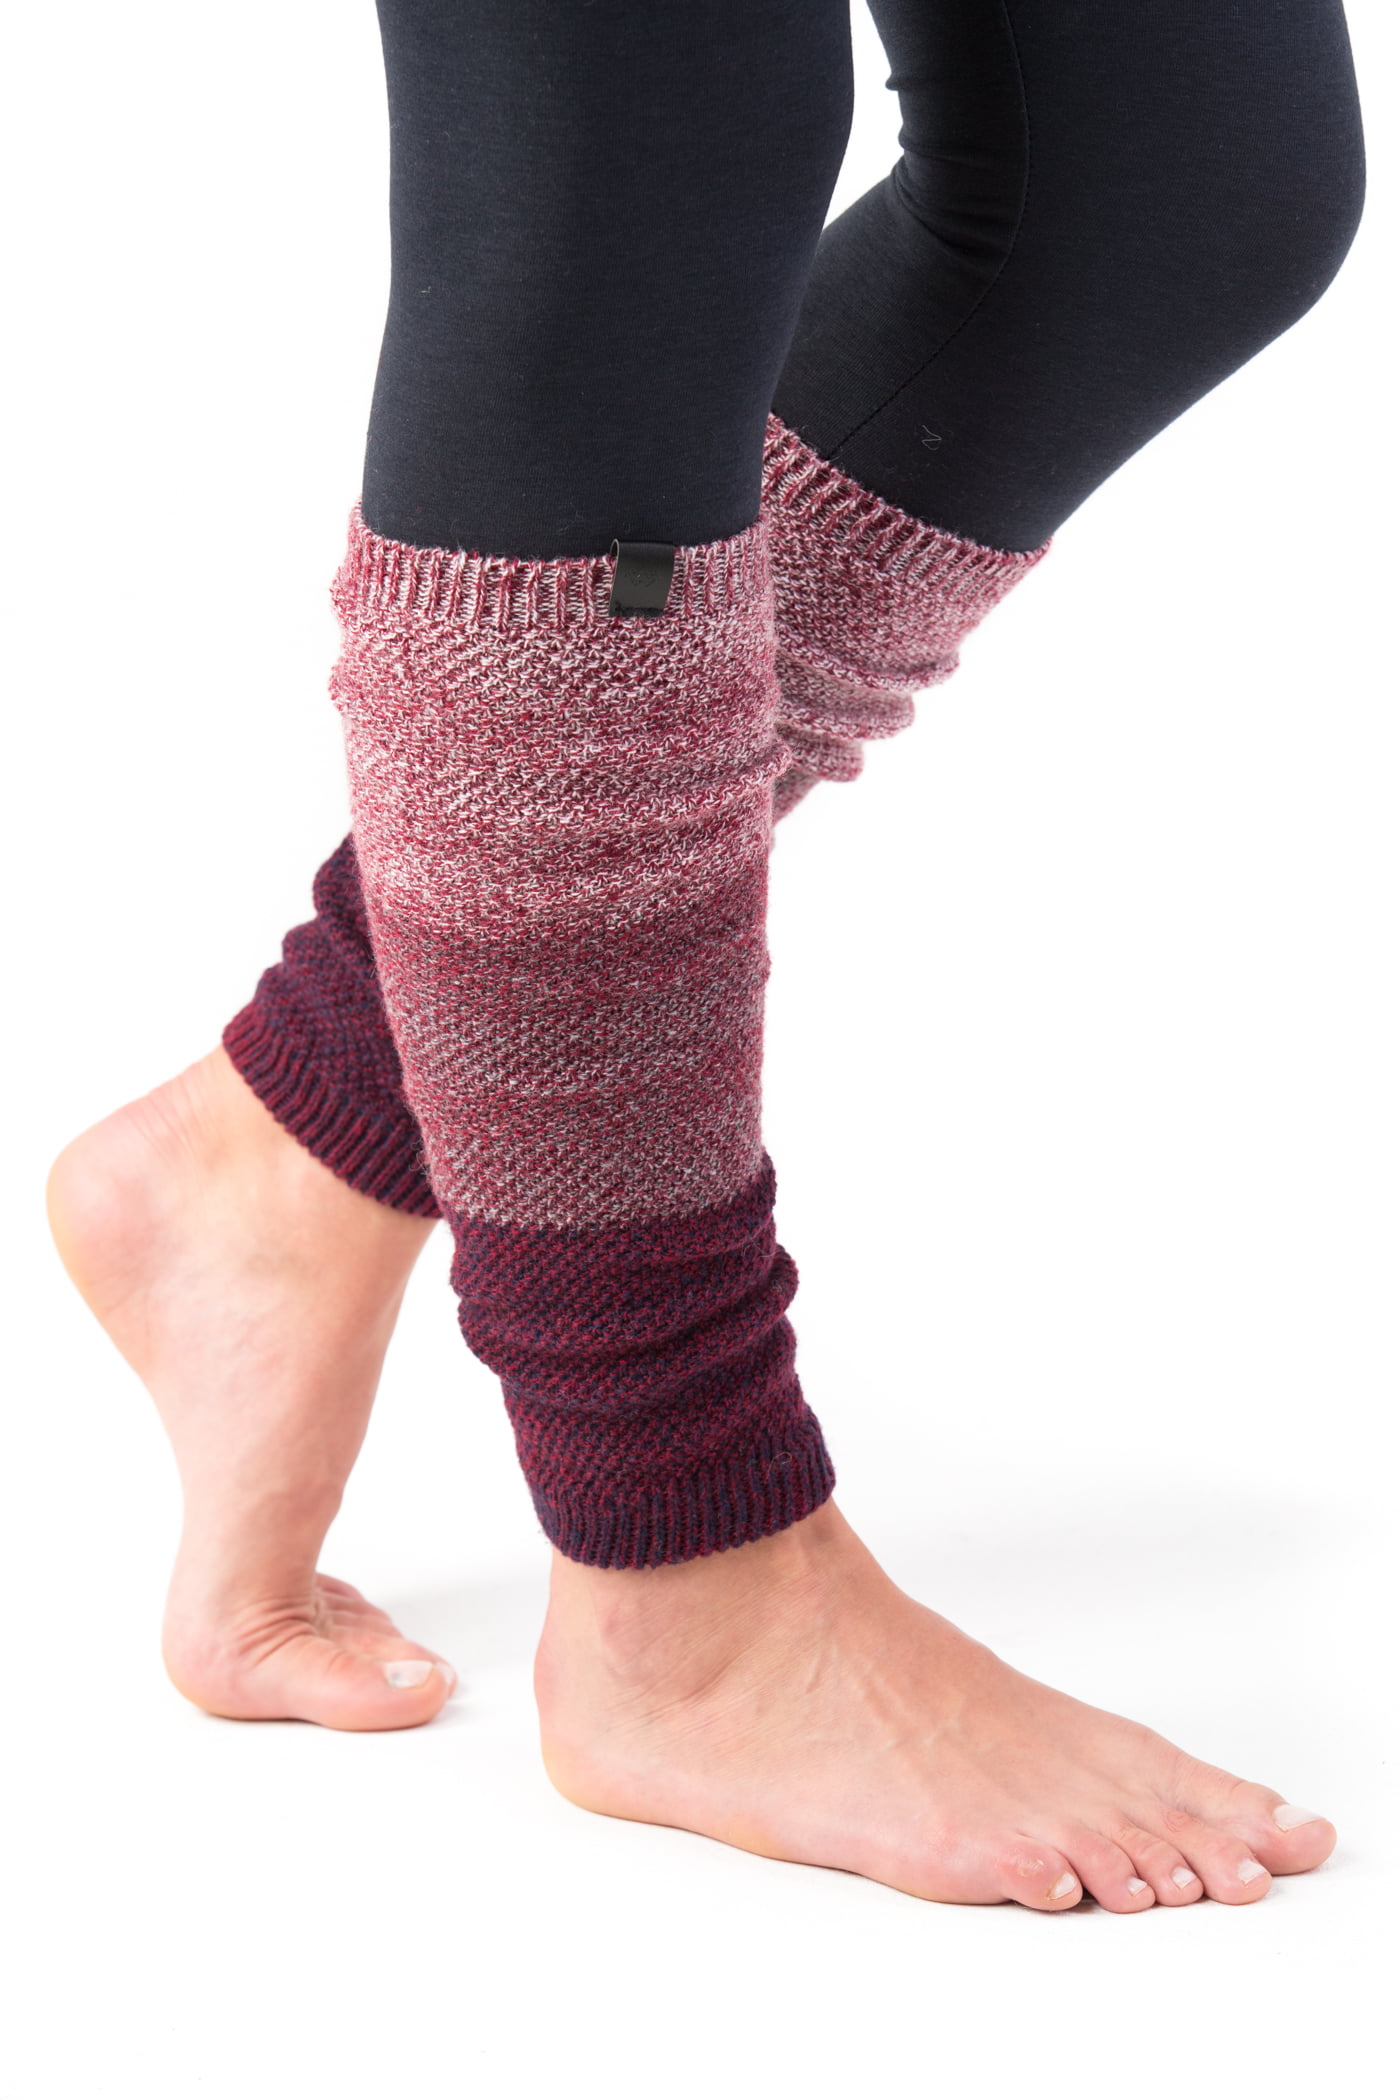 Marino Long Leg Warmers For Women Winter Knee High Knit Leg Warmer Socks Enclosed In An